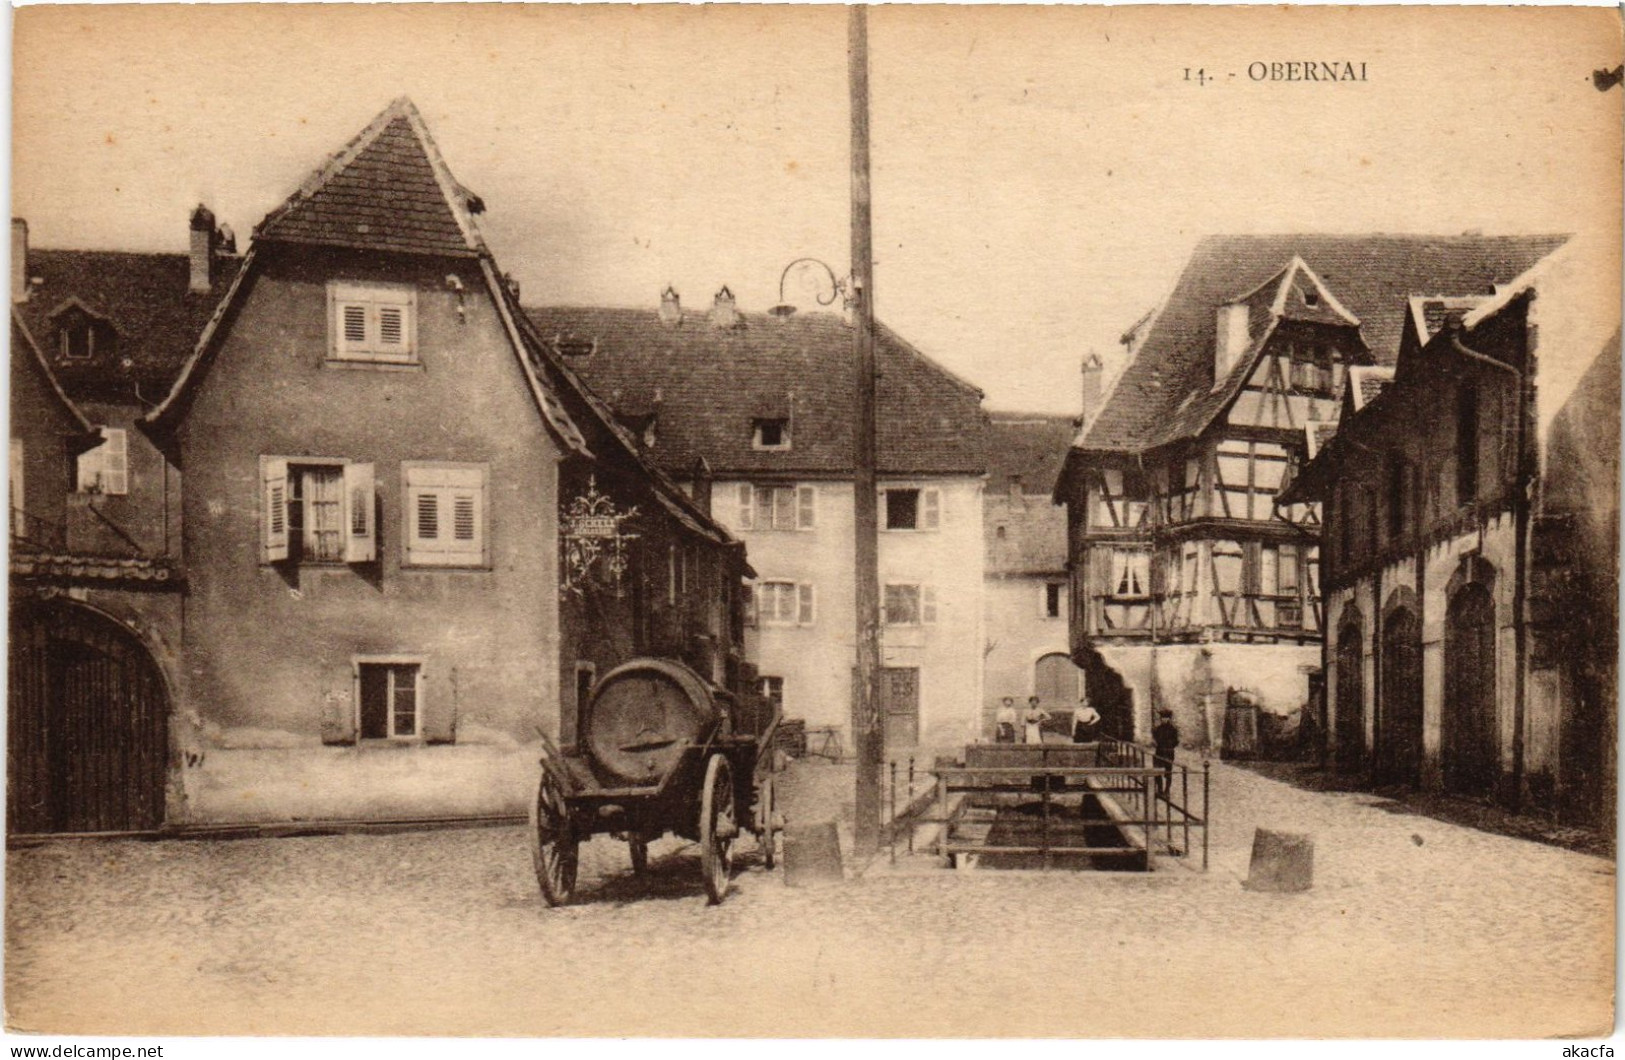 CPA Obernai (1390331) - Obernai